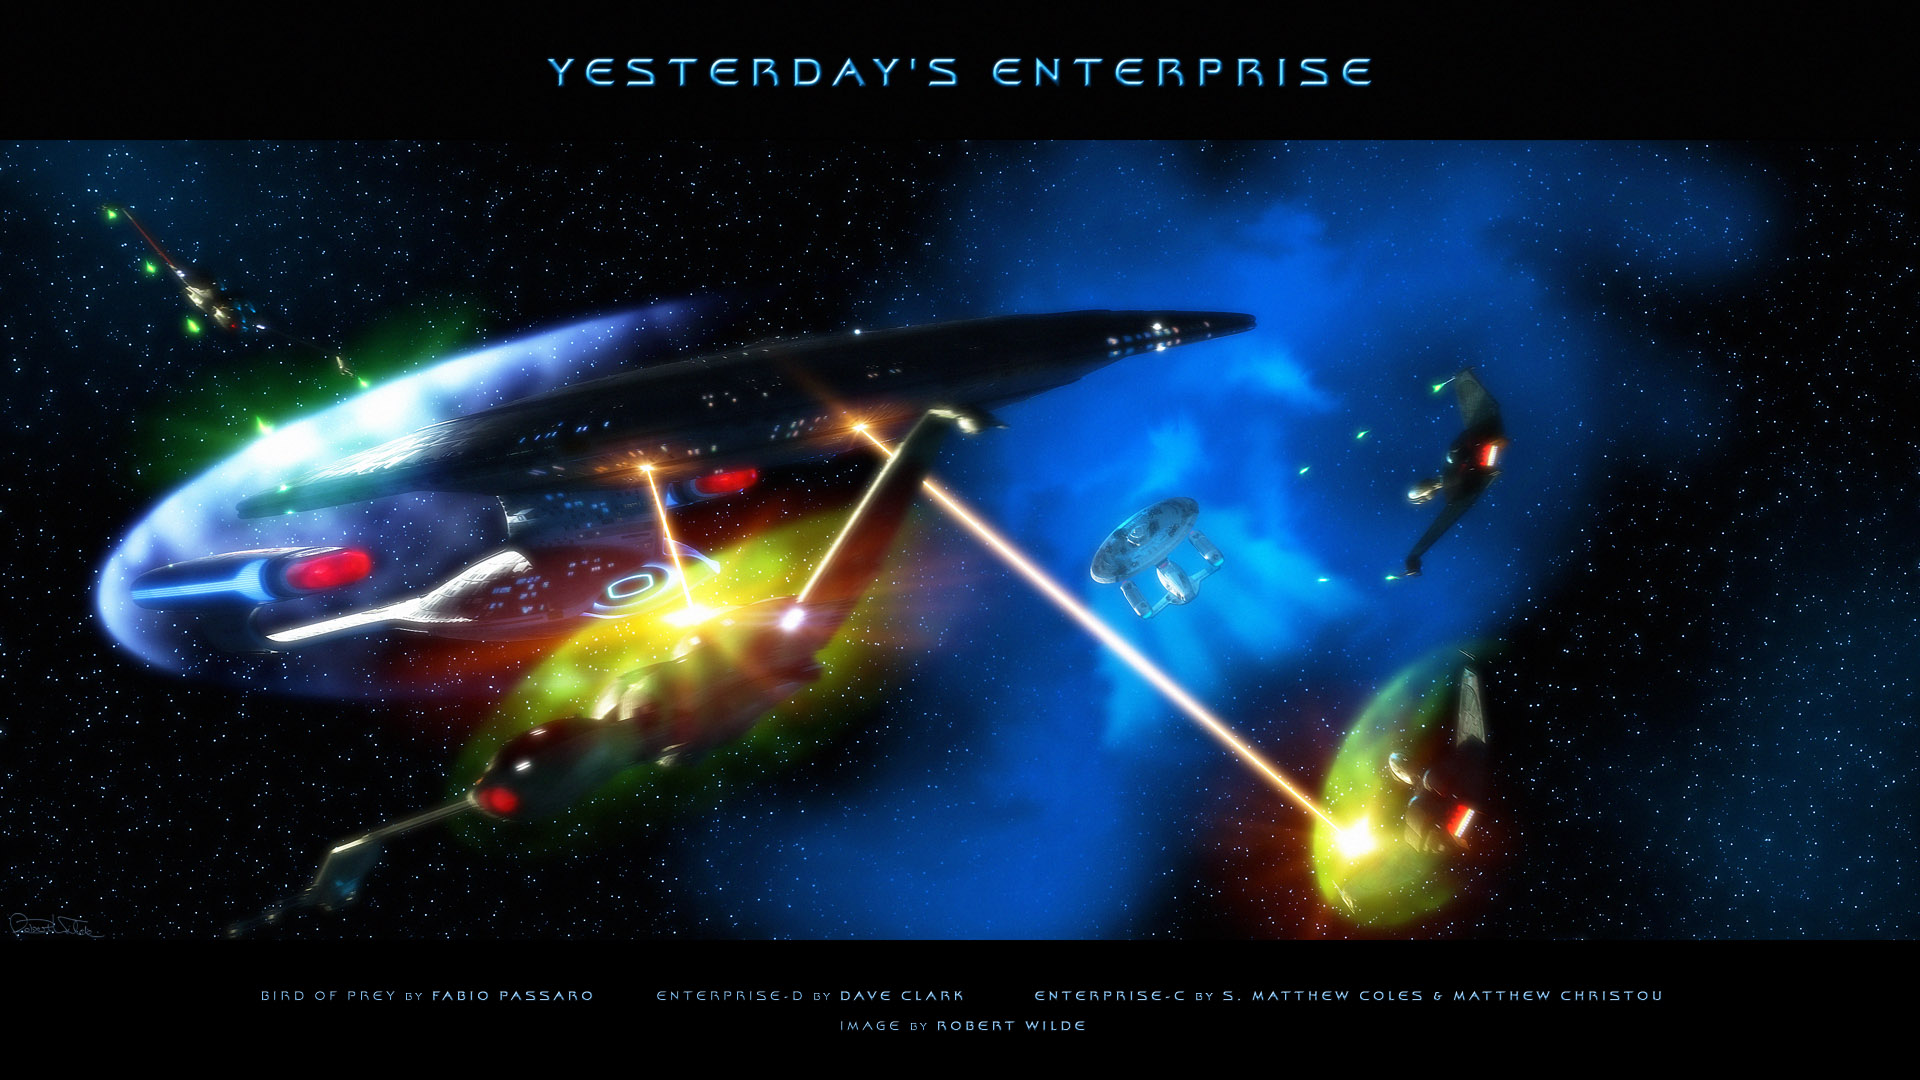 Enterprise Yesterdays Animated Wallpaper Yesterday